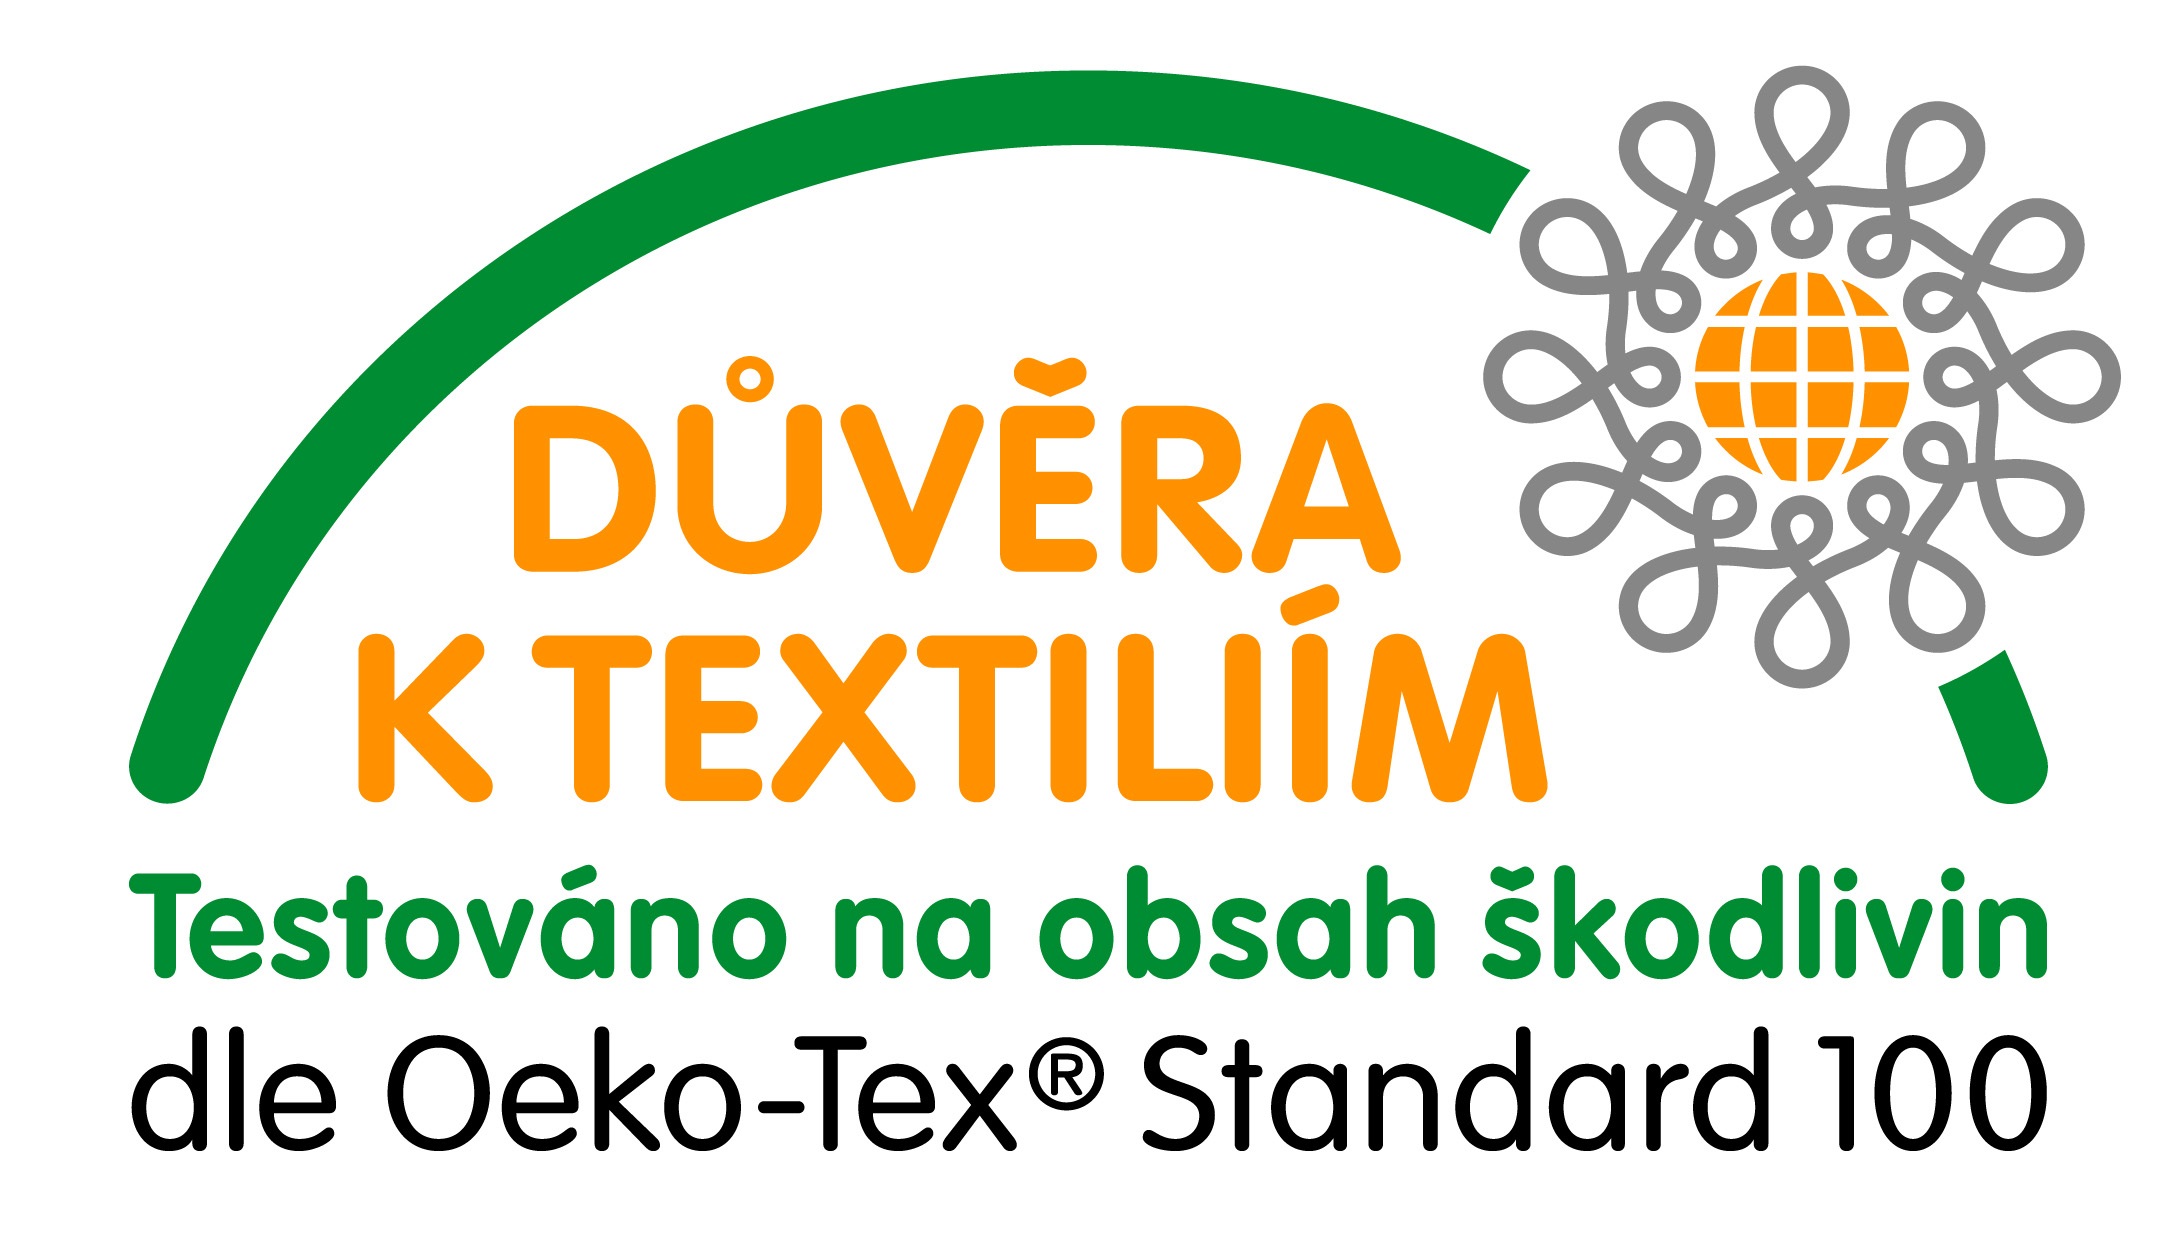 Oeko-tex-standard